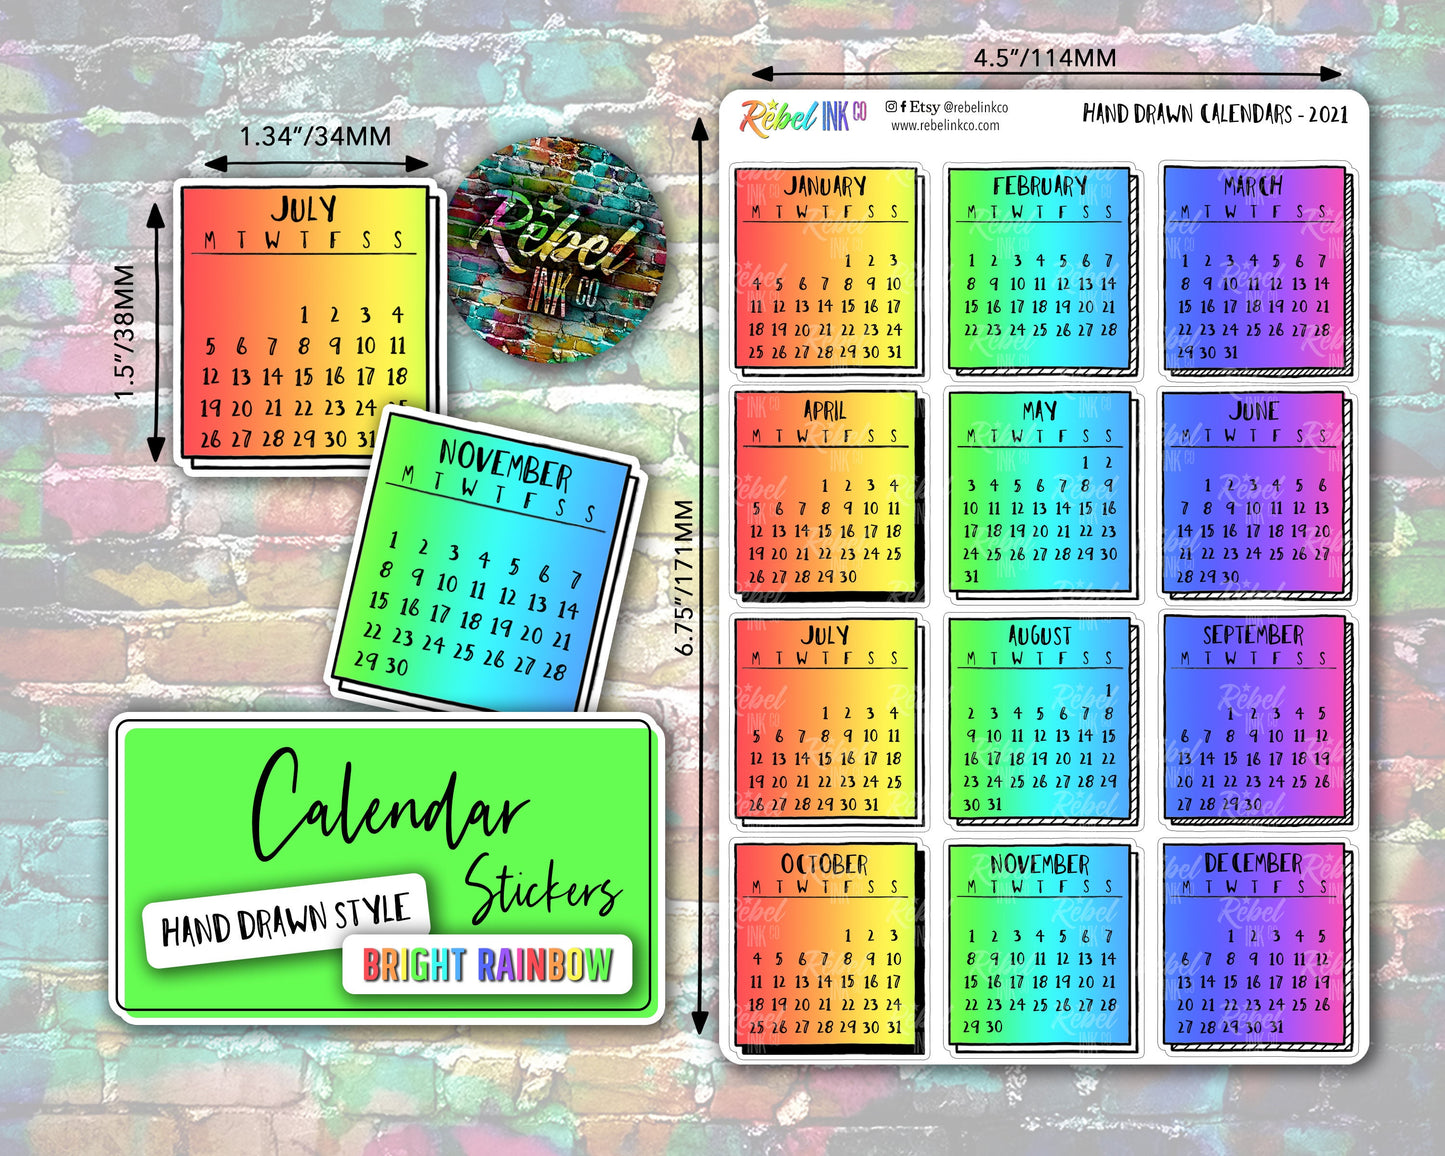 Calendar Stickers - Bright Rainbow - Hand Drawn Style